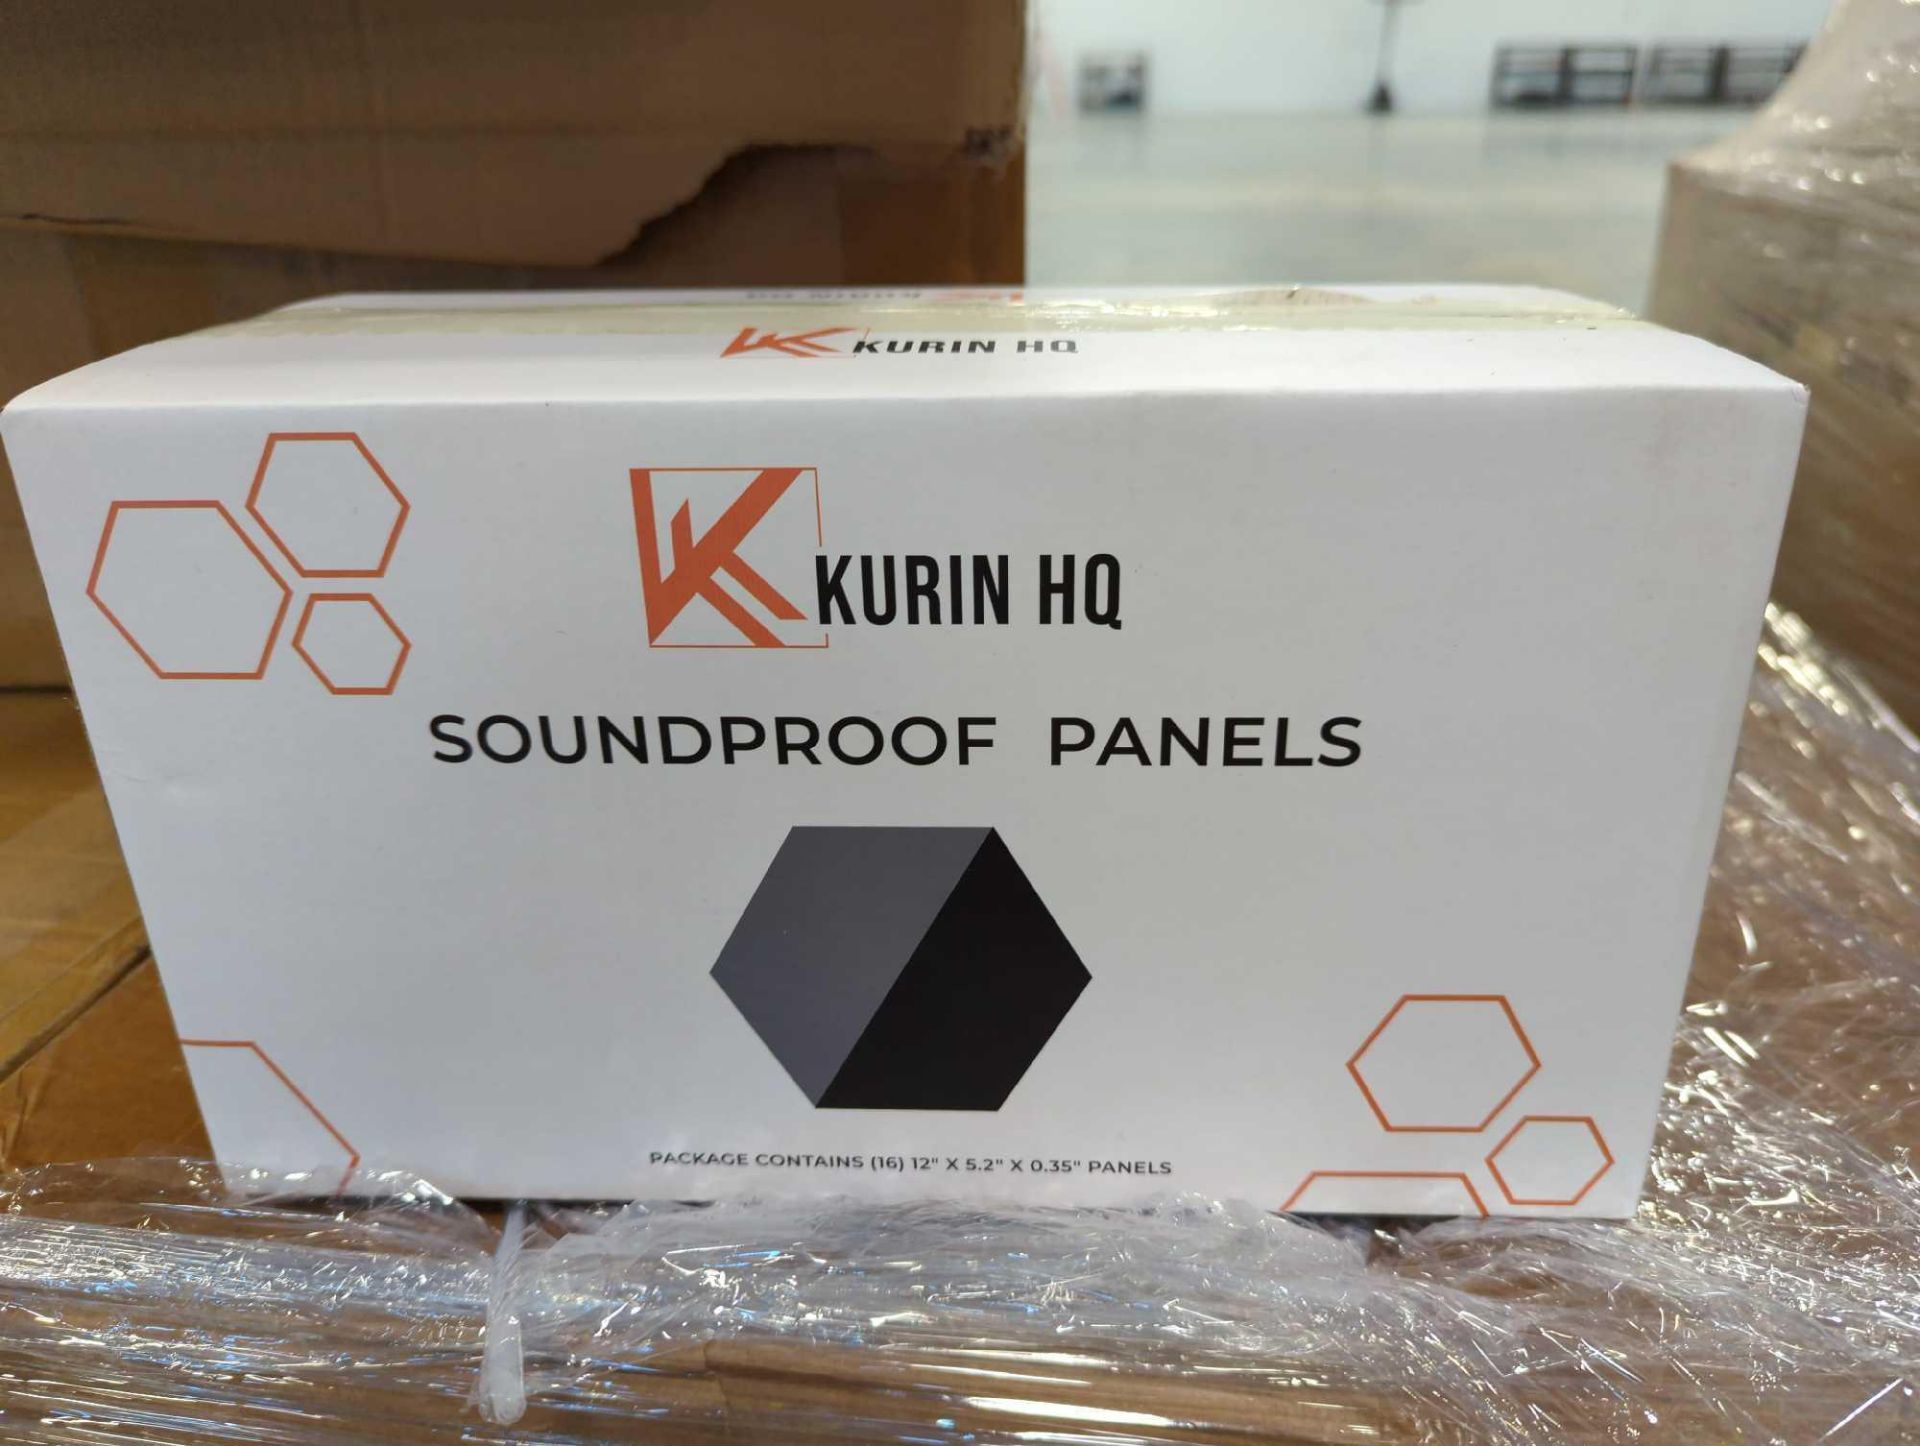 Kurin HQ soundproof panels